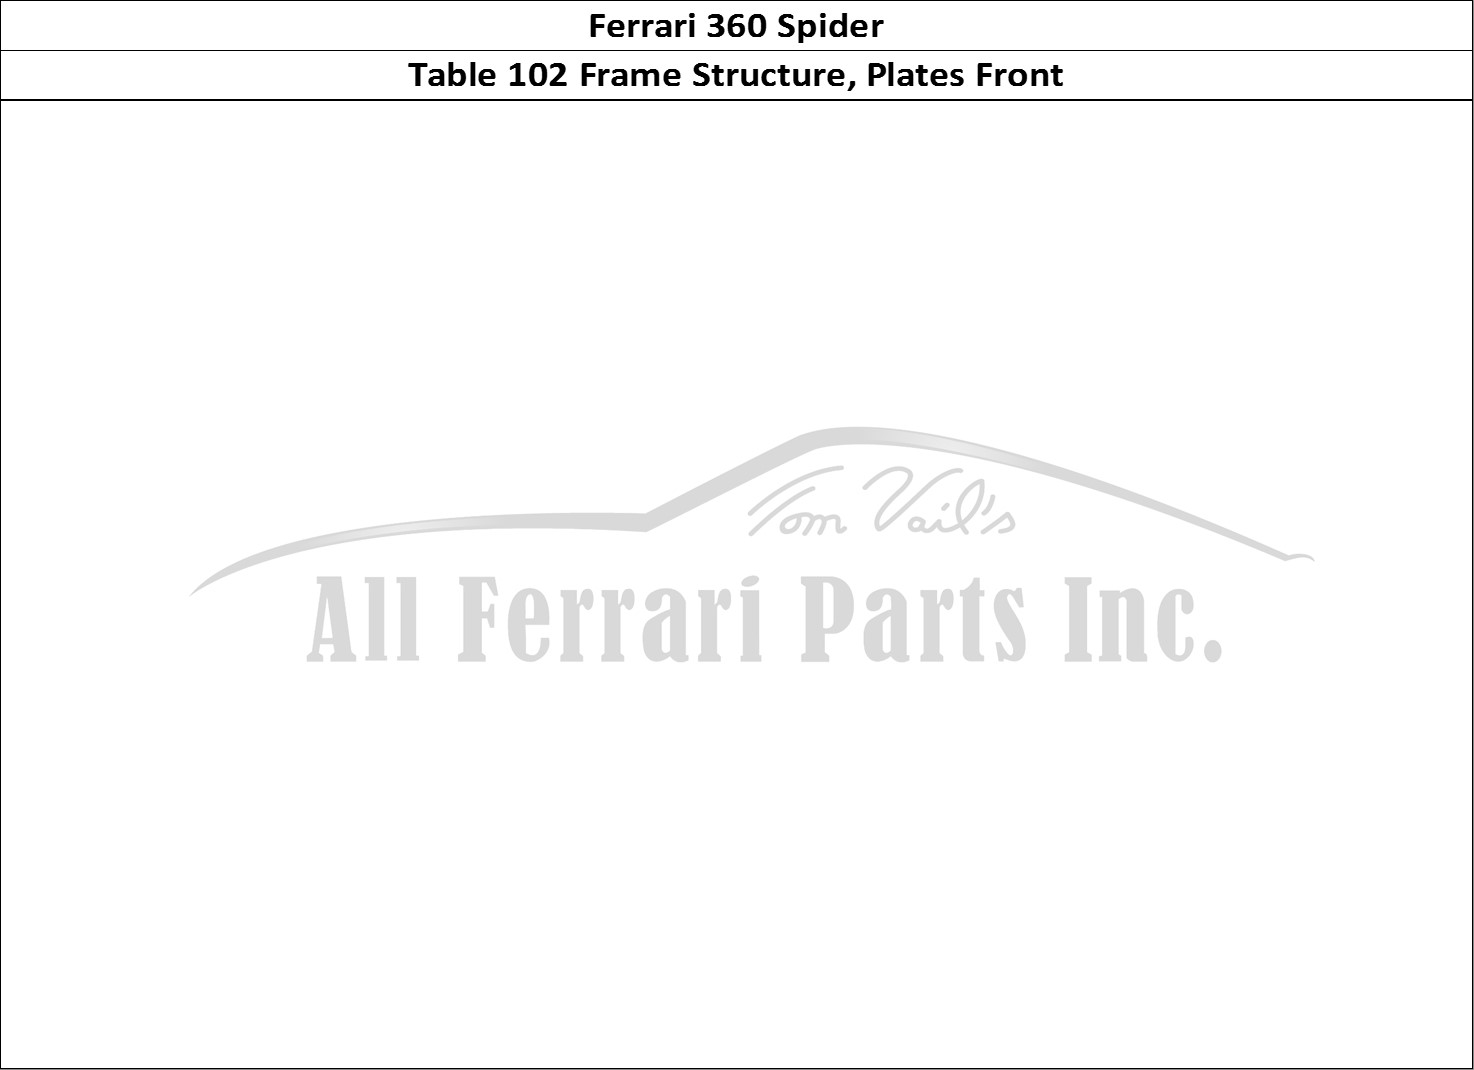 Ferrari Parts Ferrari 360 Spider Page 102 Frame - Front Elements St